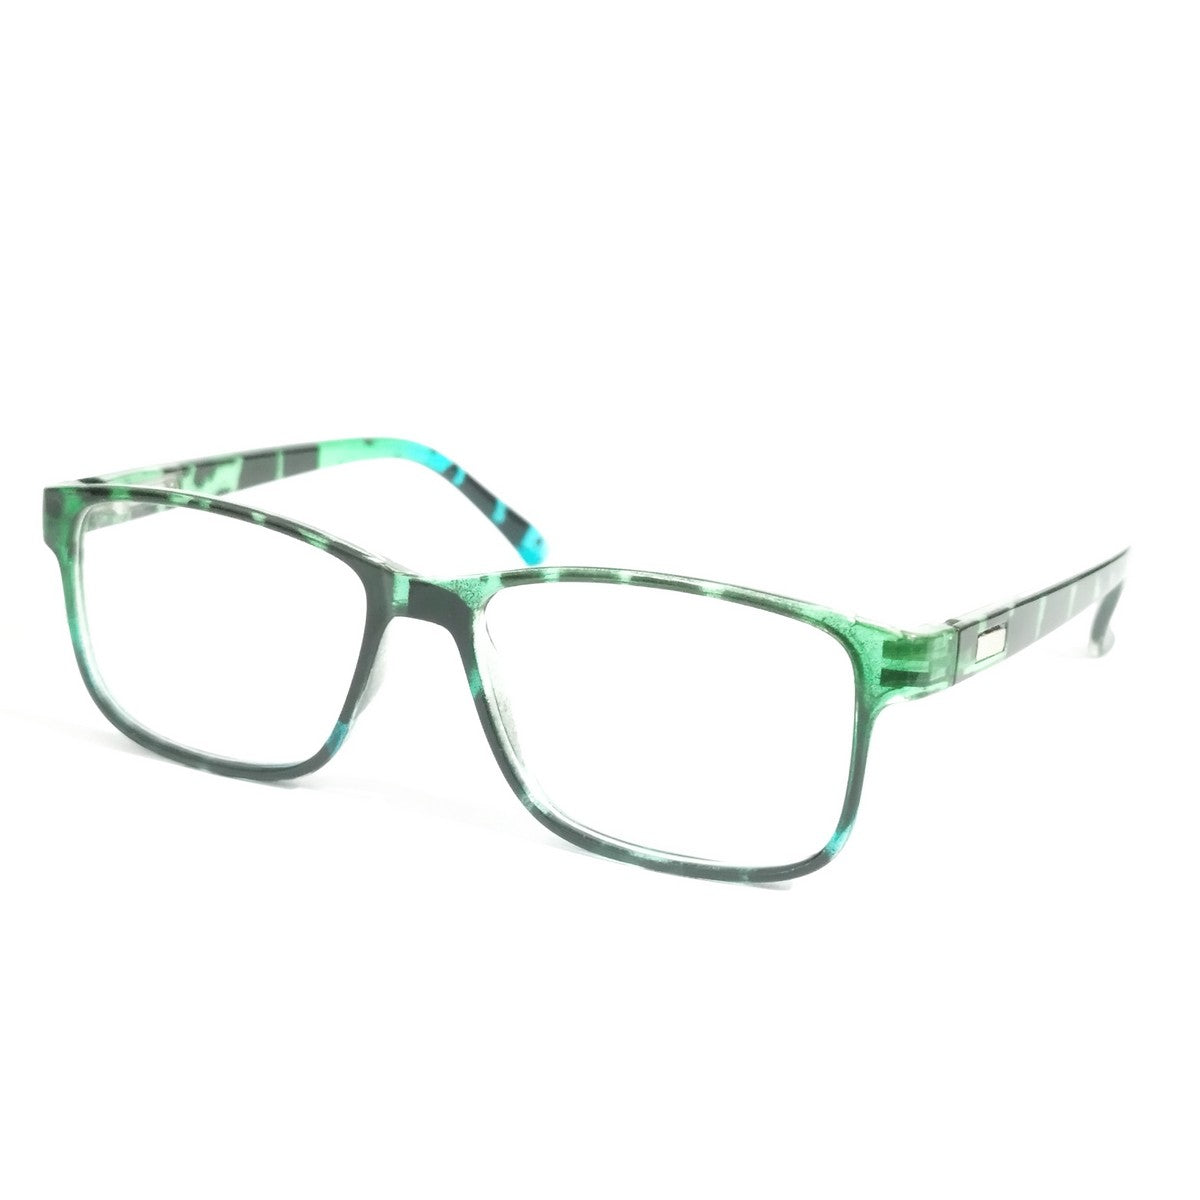 Vibrant Sea-Green Frame Multifocal Progressive Glasses